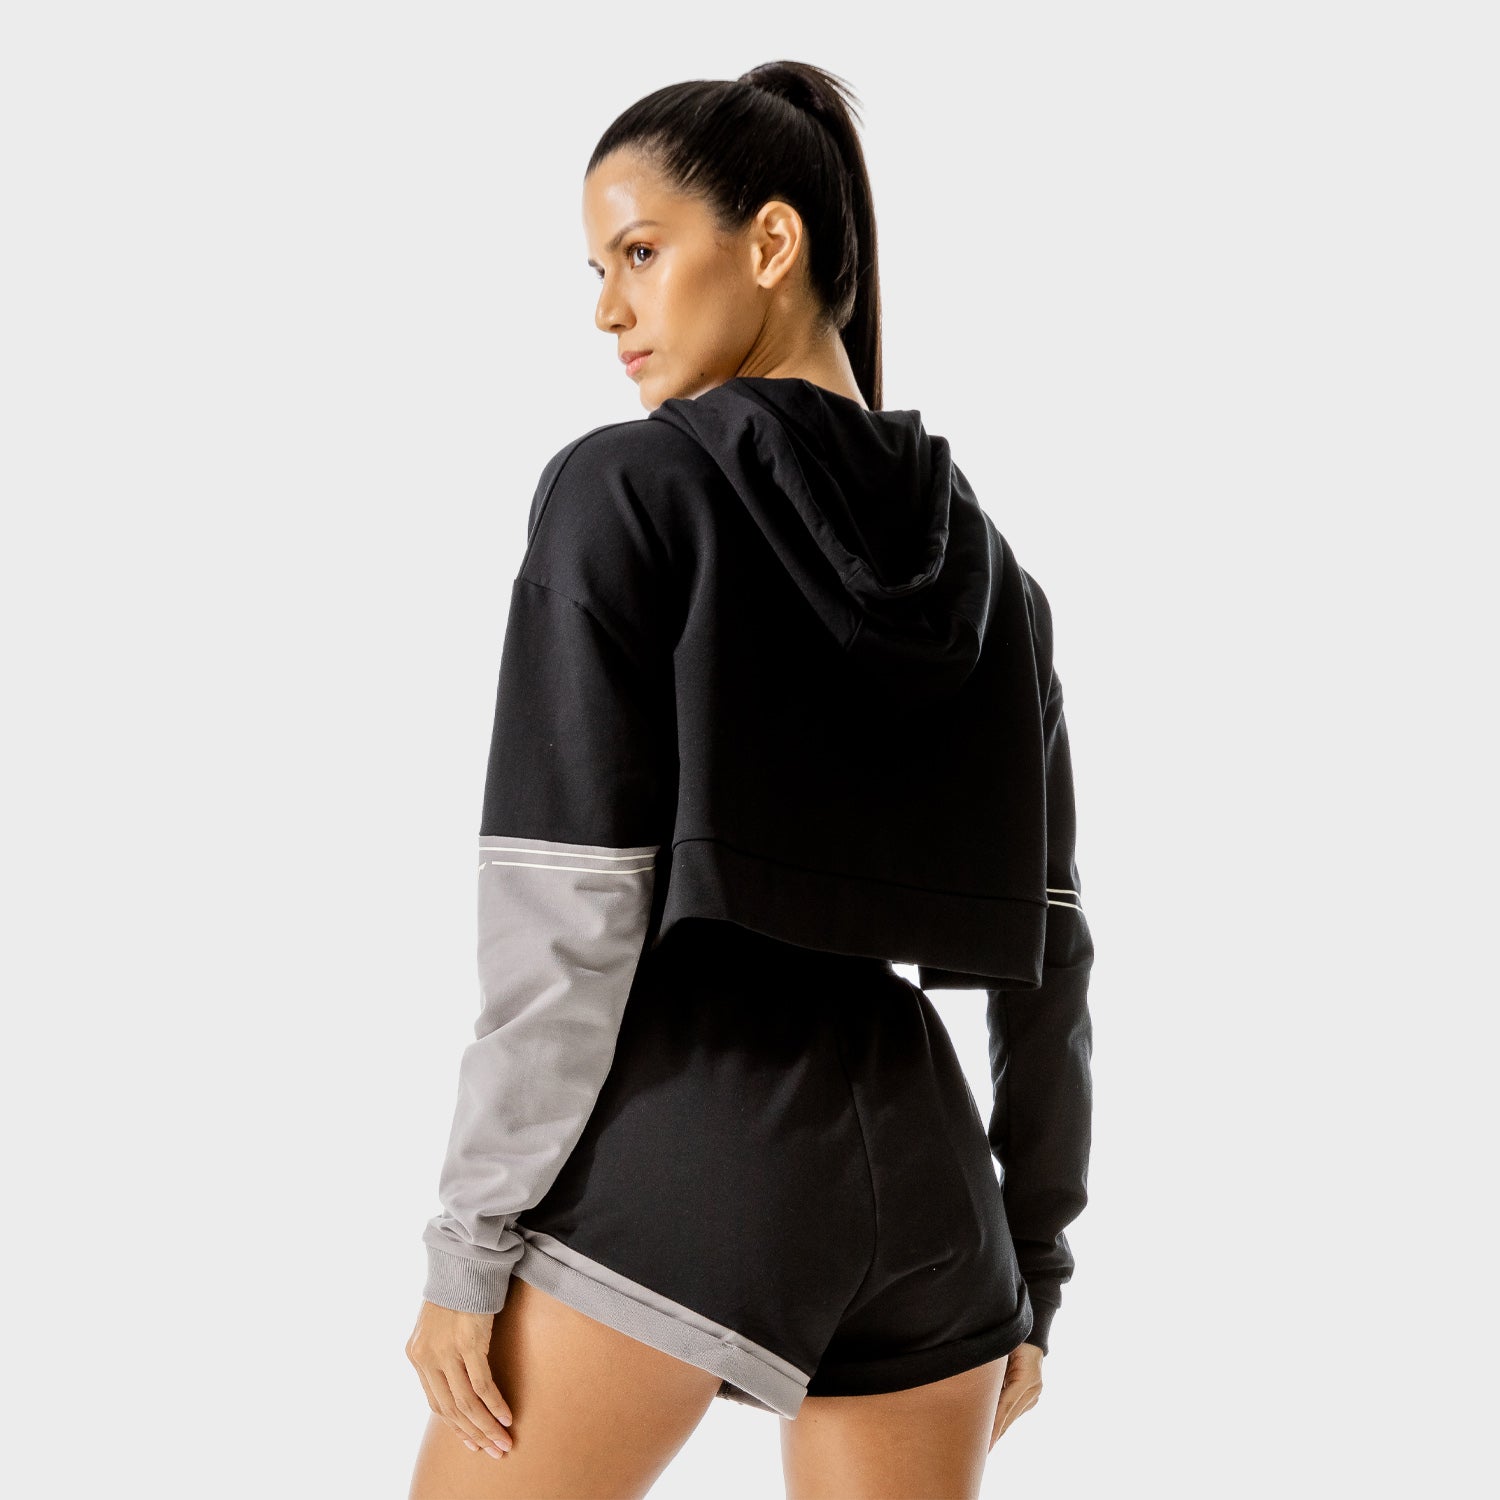 squatwolf-gym-hoodies-women-lab-360-crop-hoodie-black-workout-clothes